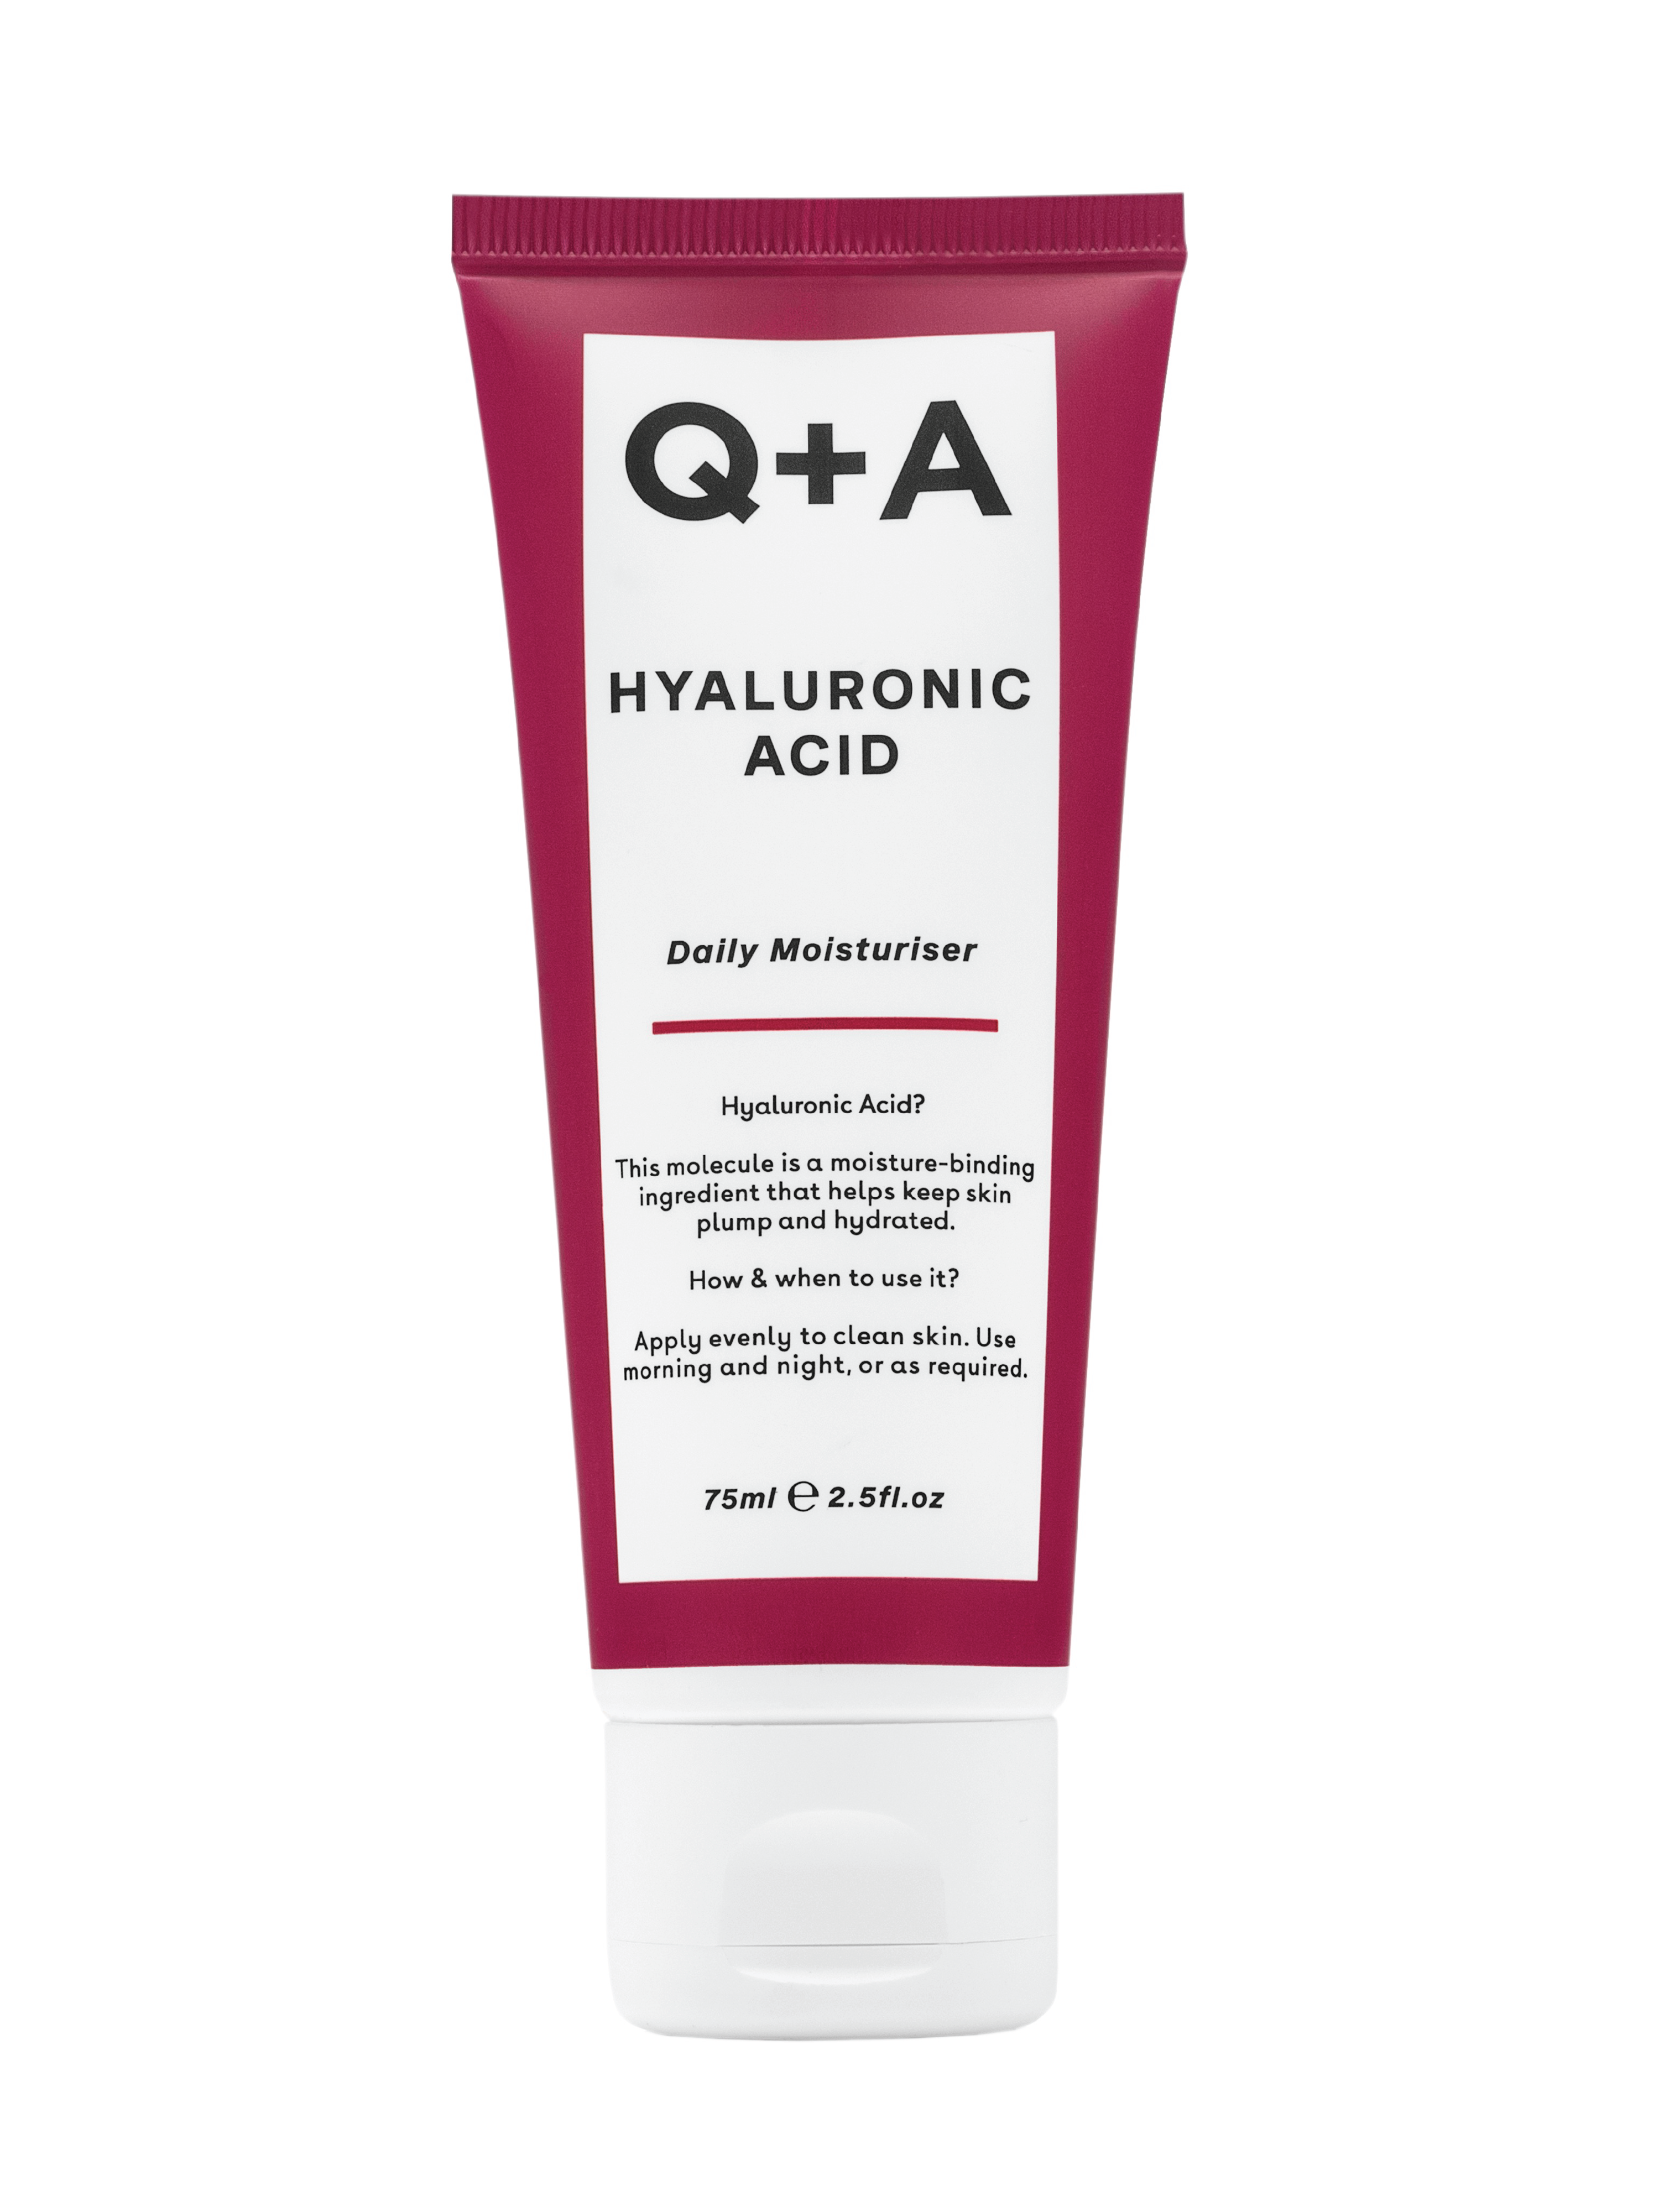 Q+A Hyaluronic Acid Daily Moisturiser, 75 ml